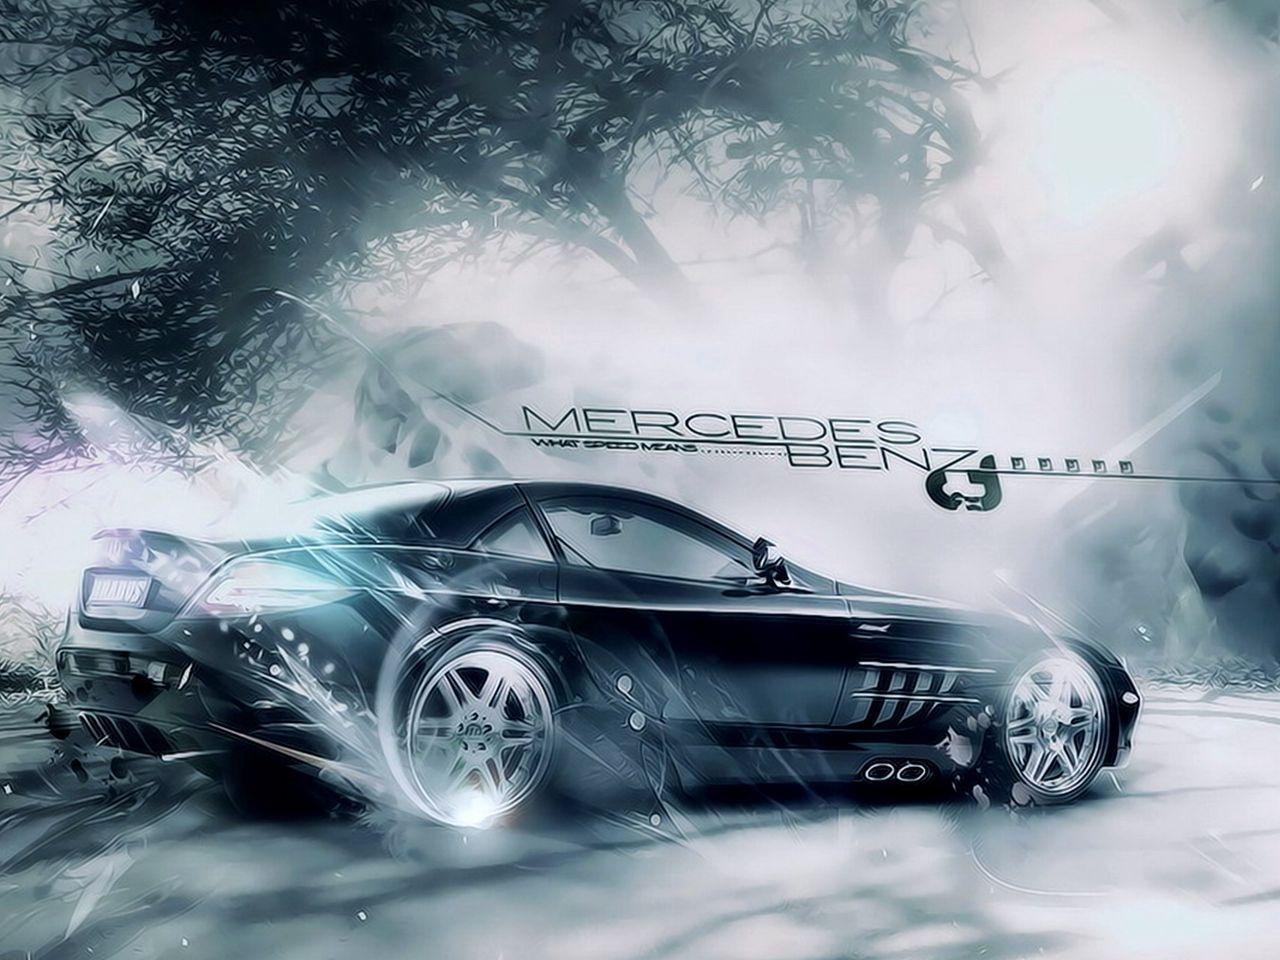 Benz Black HD Wallpaper Free Download Black Painted Car